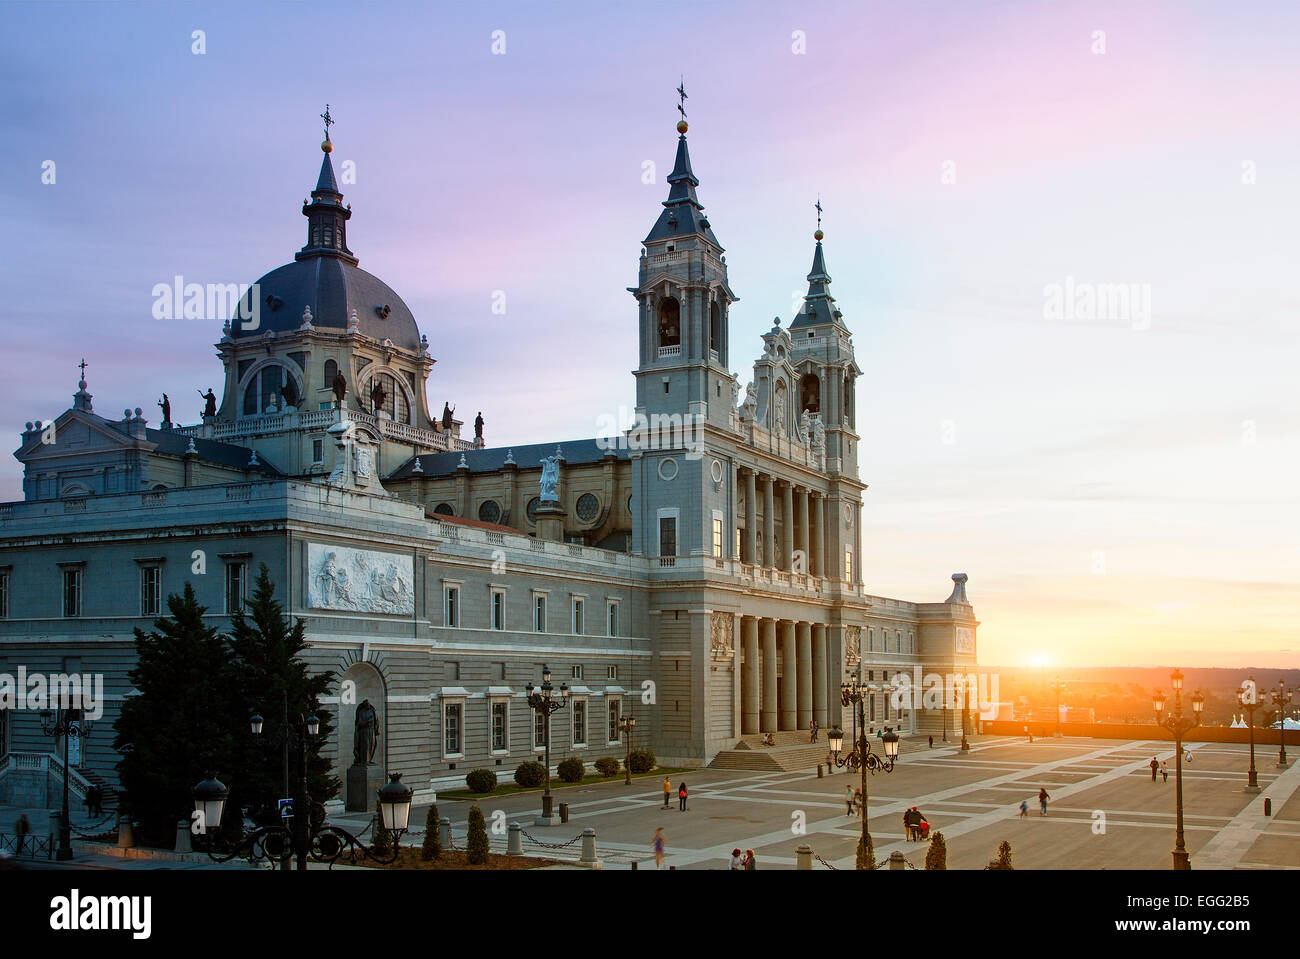 The landmark Almudena Cathedral in central Madrid Stock Photo